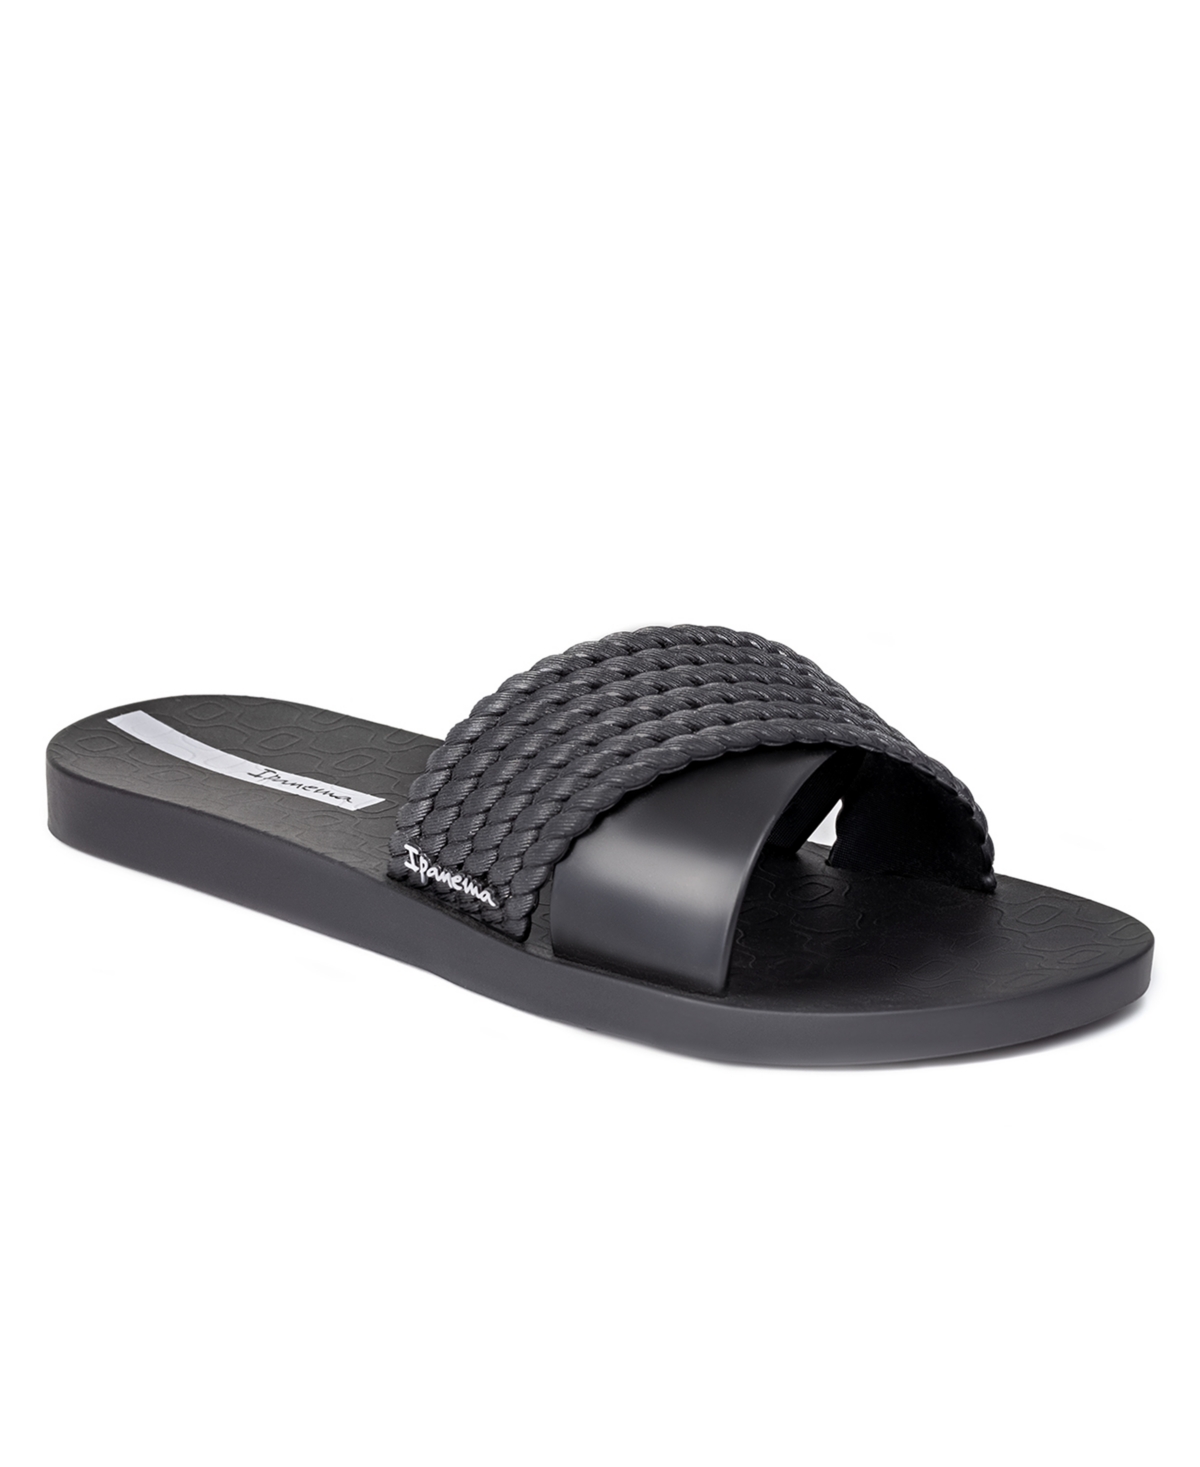 Women's Street Ii Water-resistant Slide Sandals - Black, Black